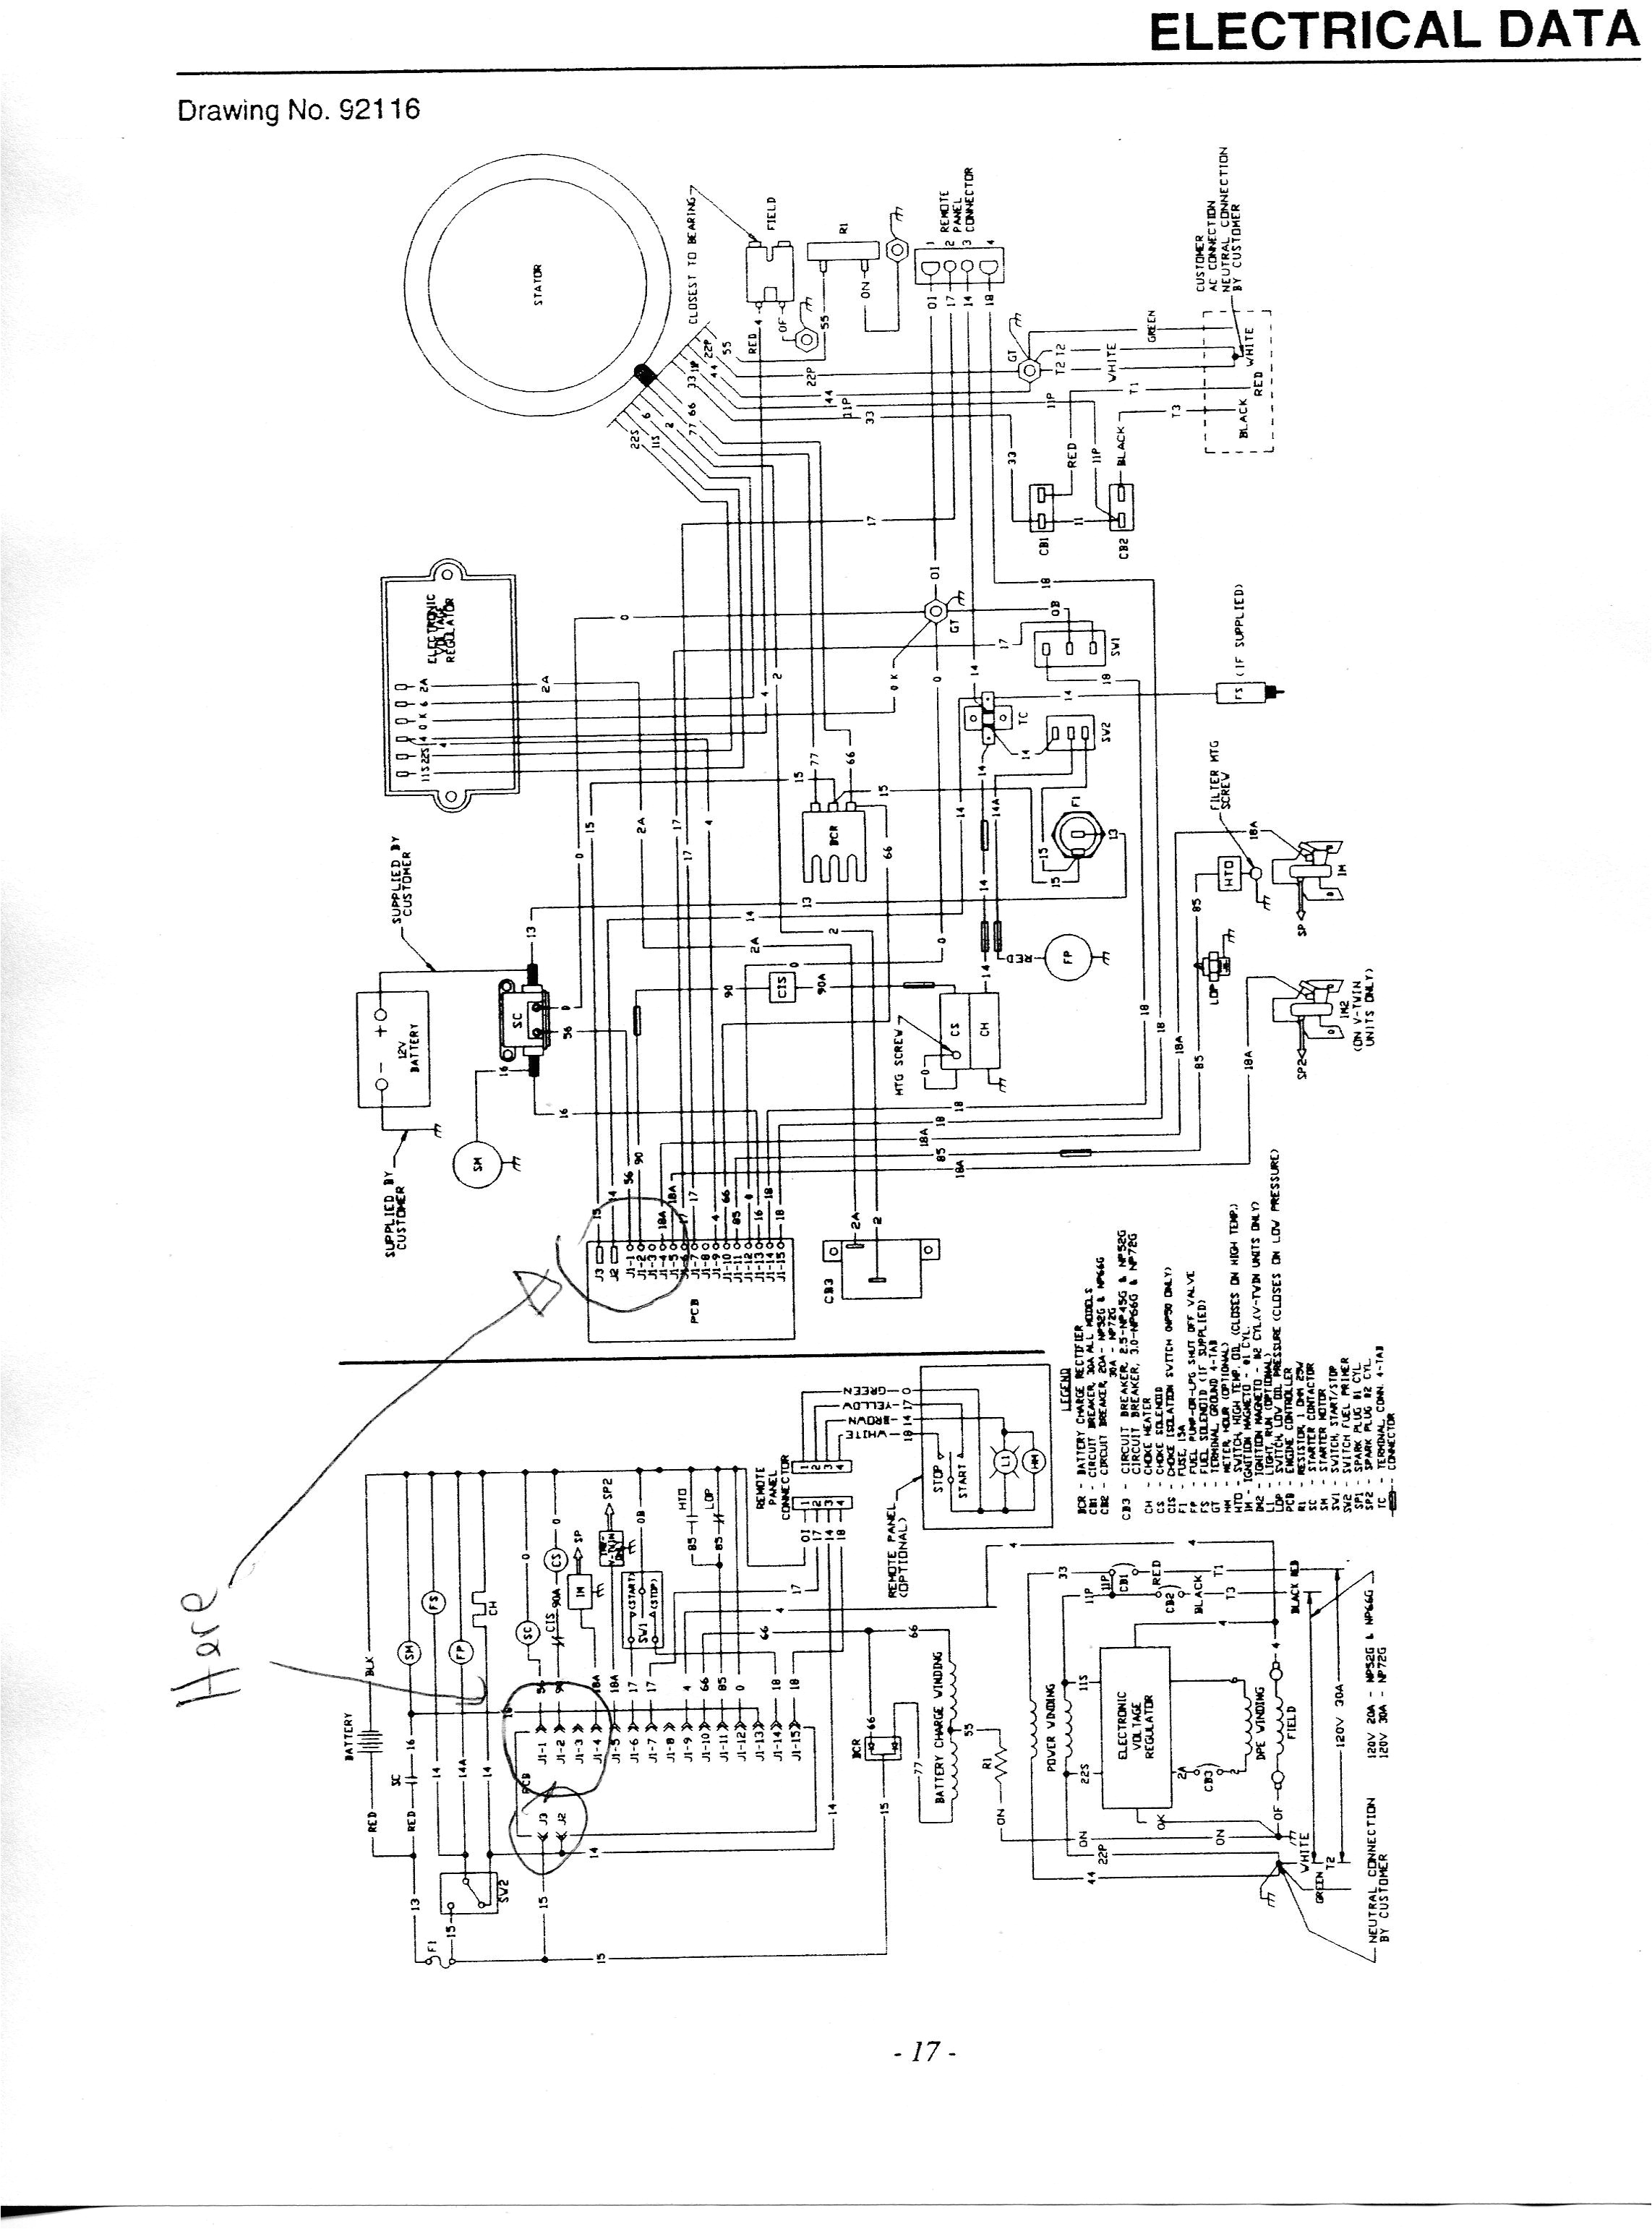 generac standby generator wiring diagram gallery